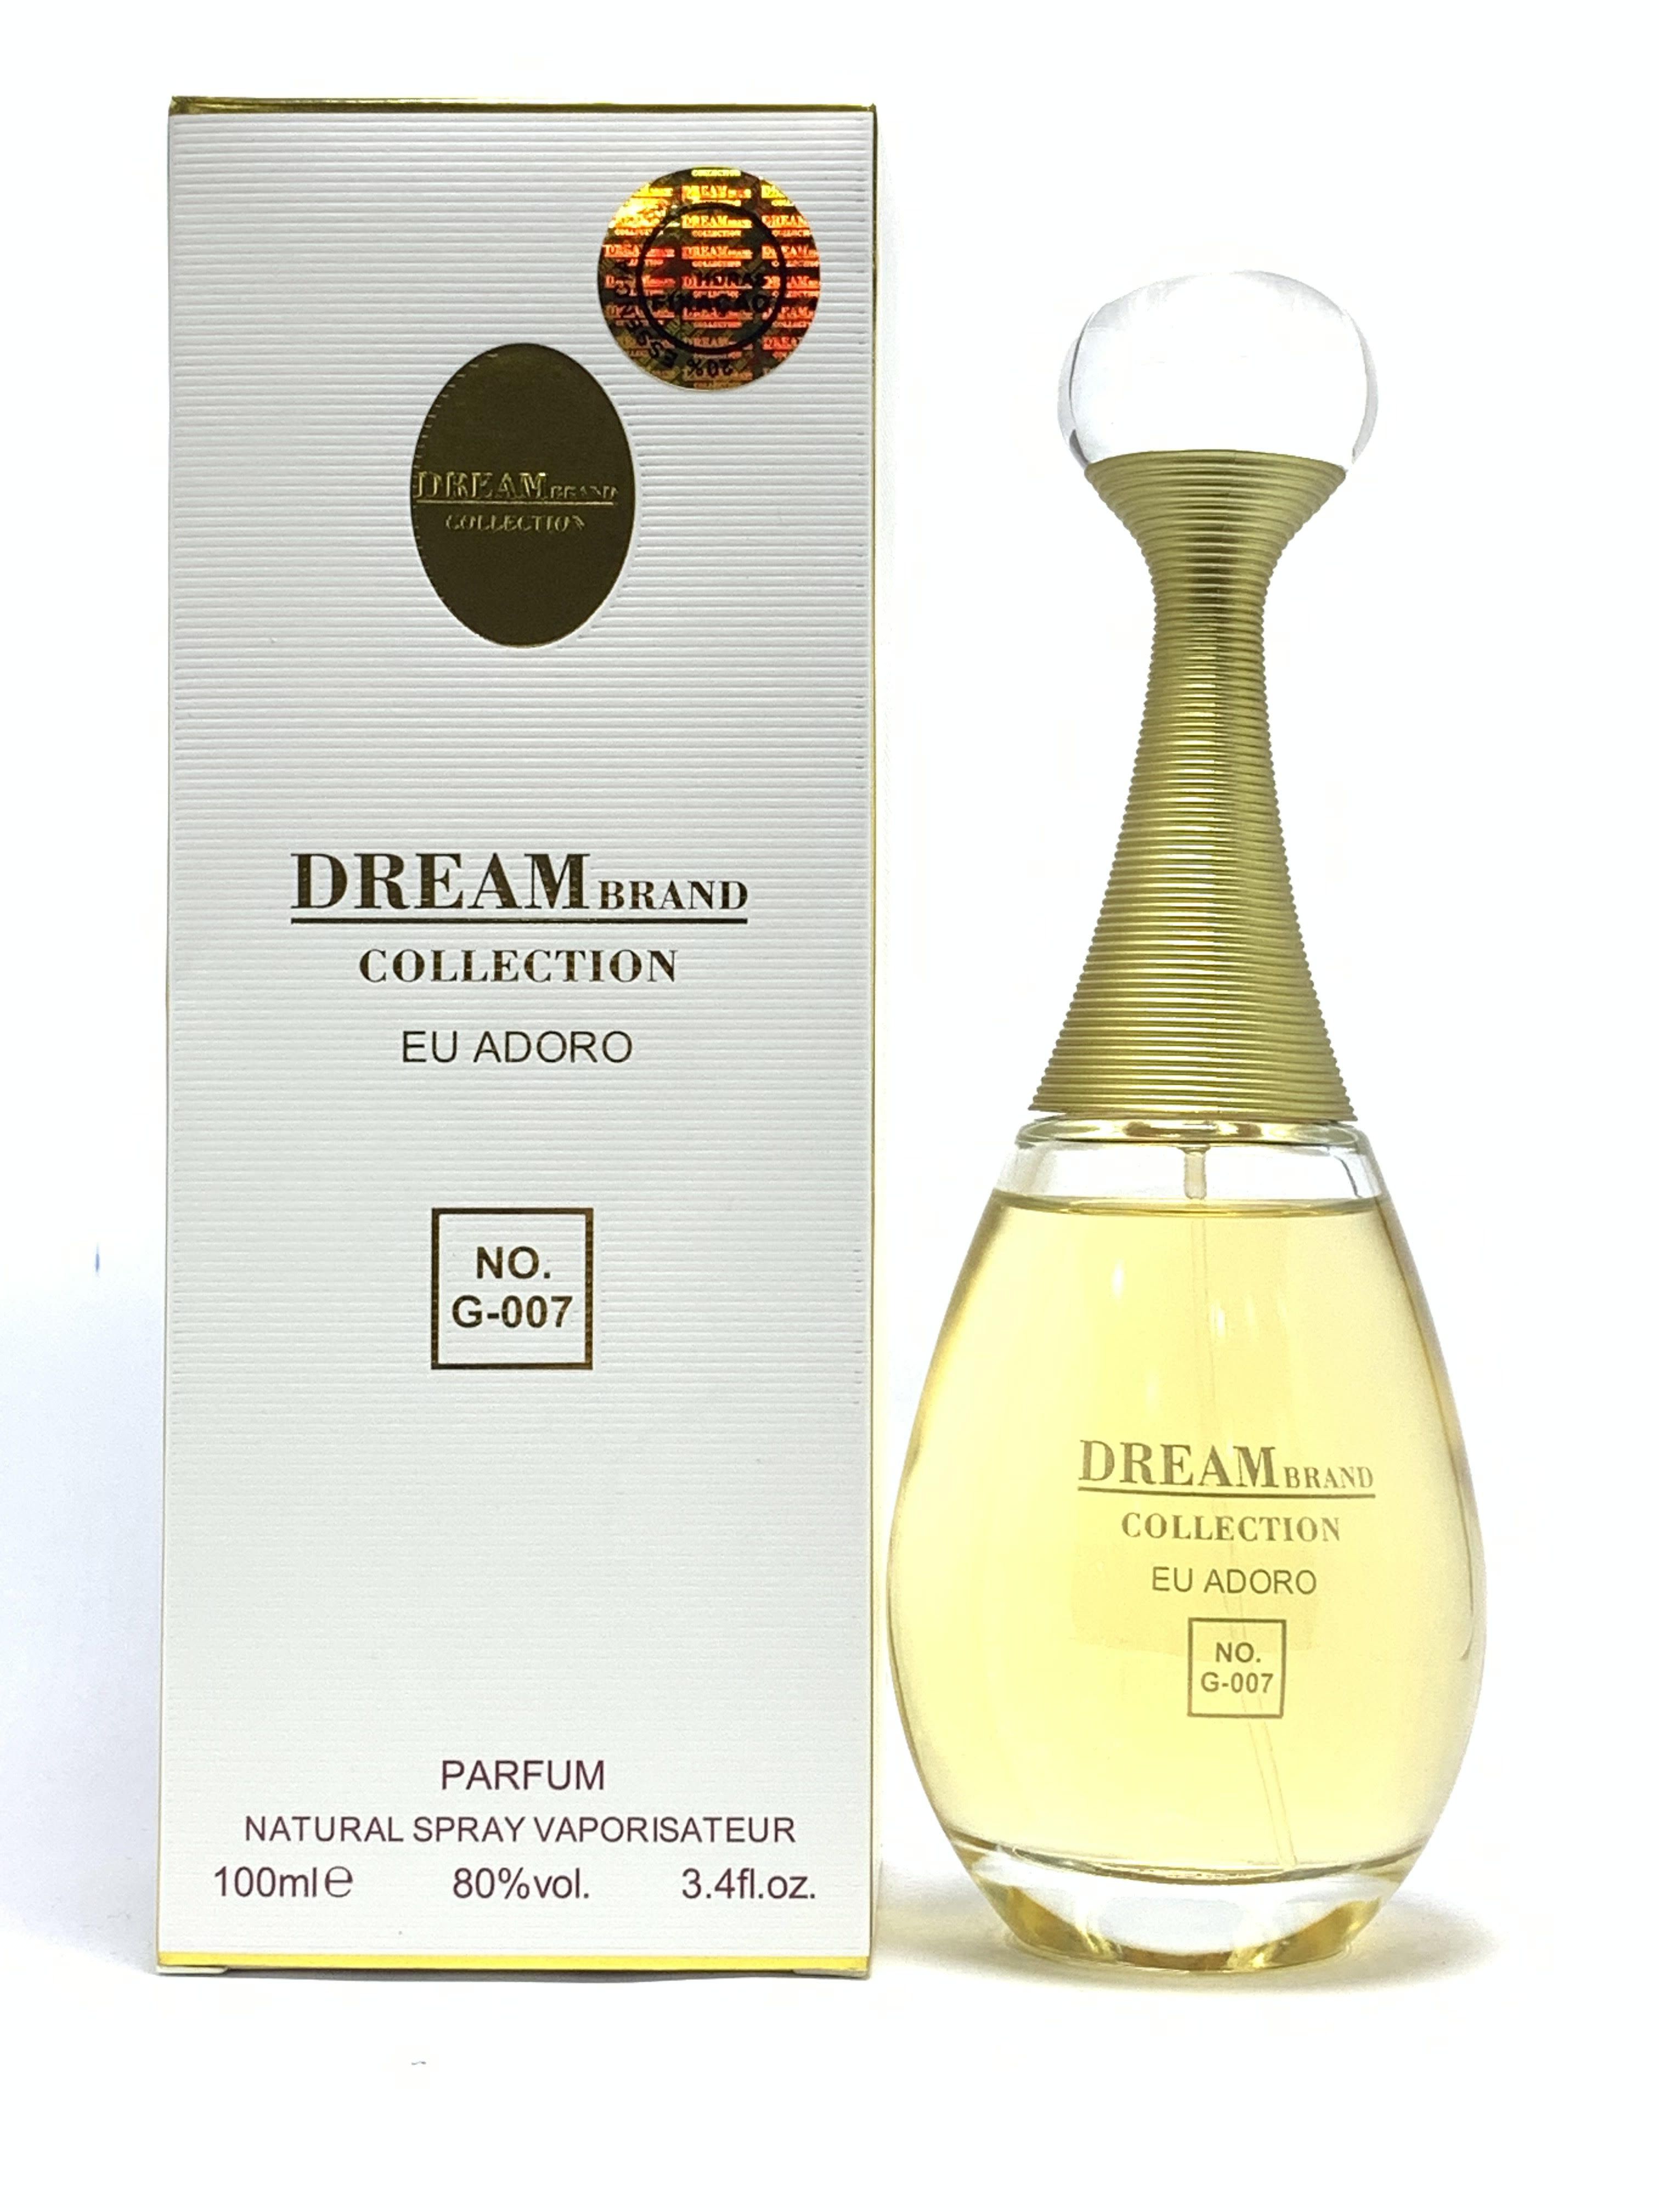 perfumes brand collection em Promoção na Shopee Brasil 2024